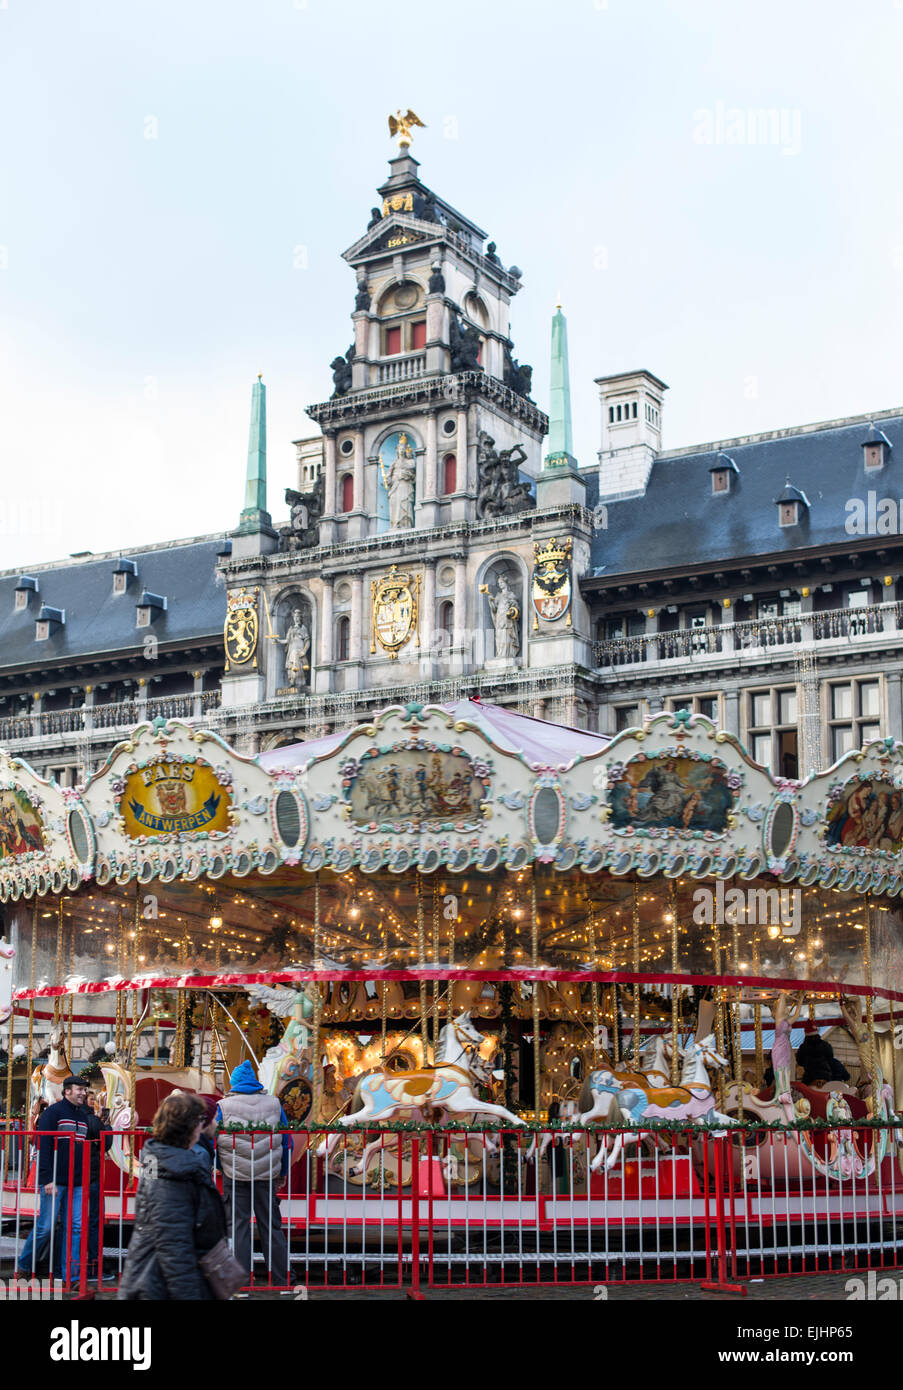 Carousel in Antwerp, Belgium, main square at Christmas Stock Photo